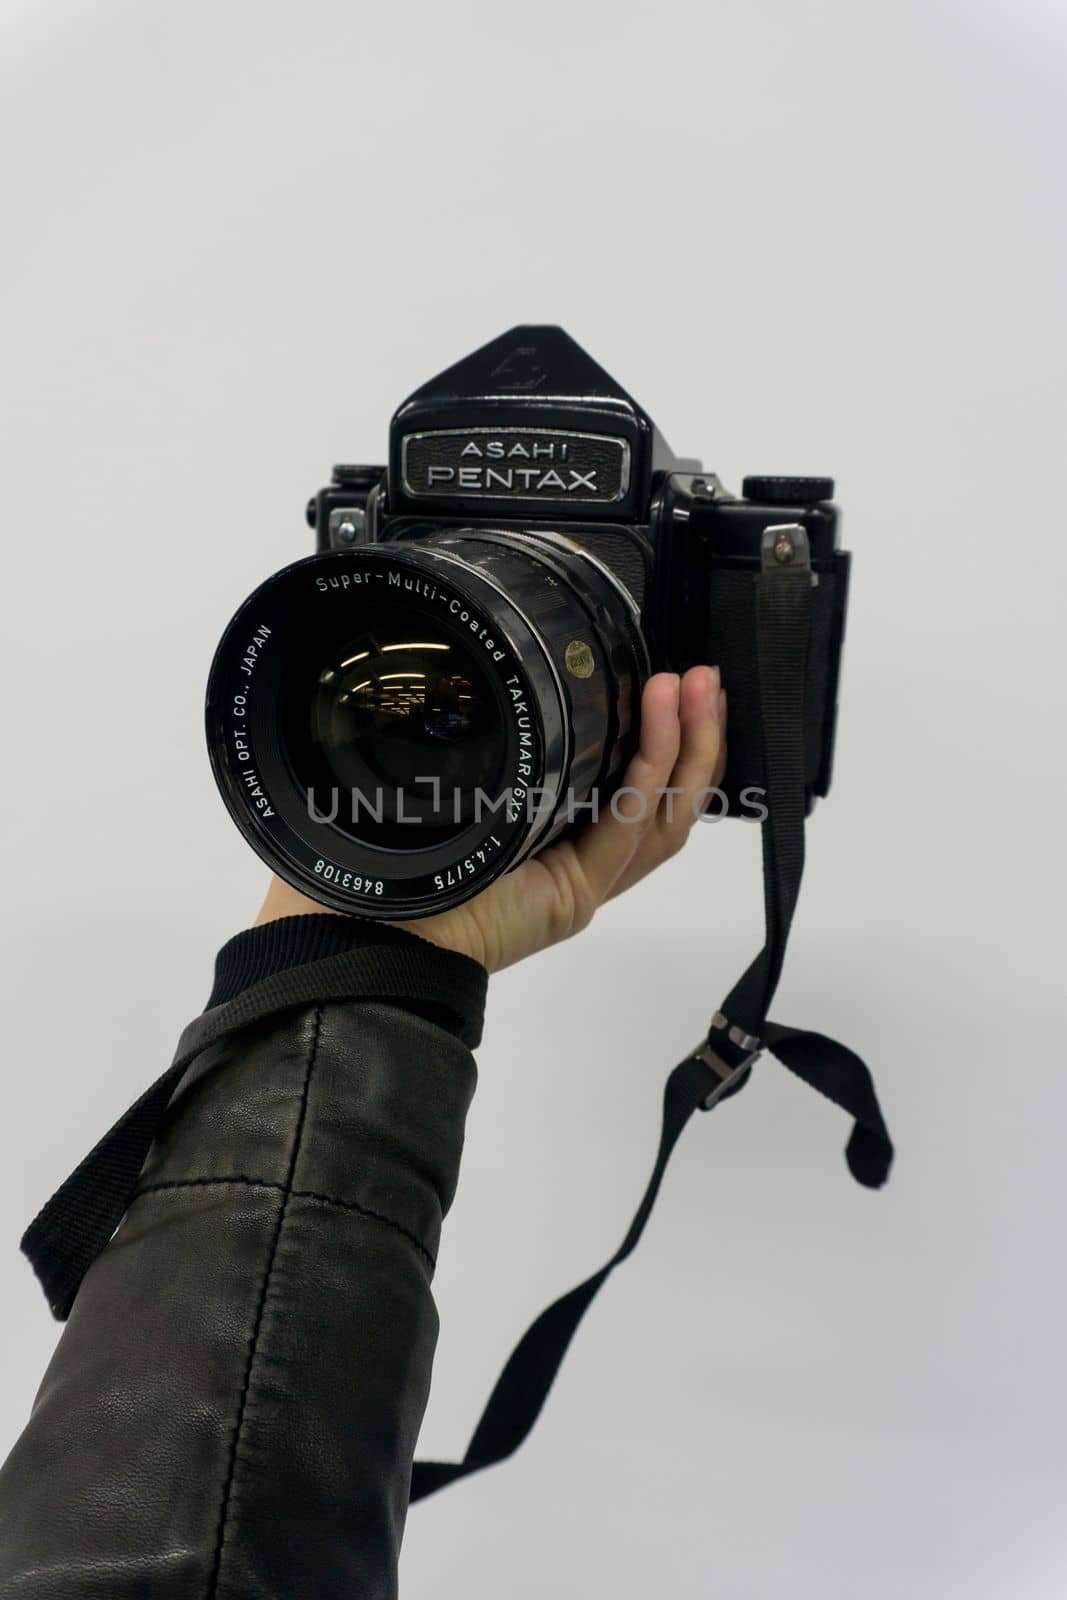 Huge retro Pentax camera in hand close up